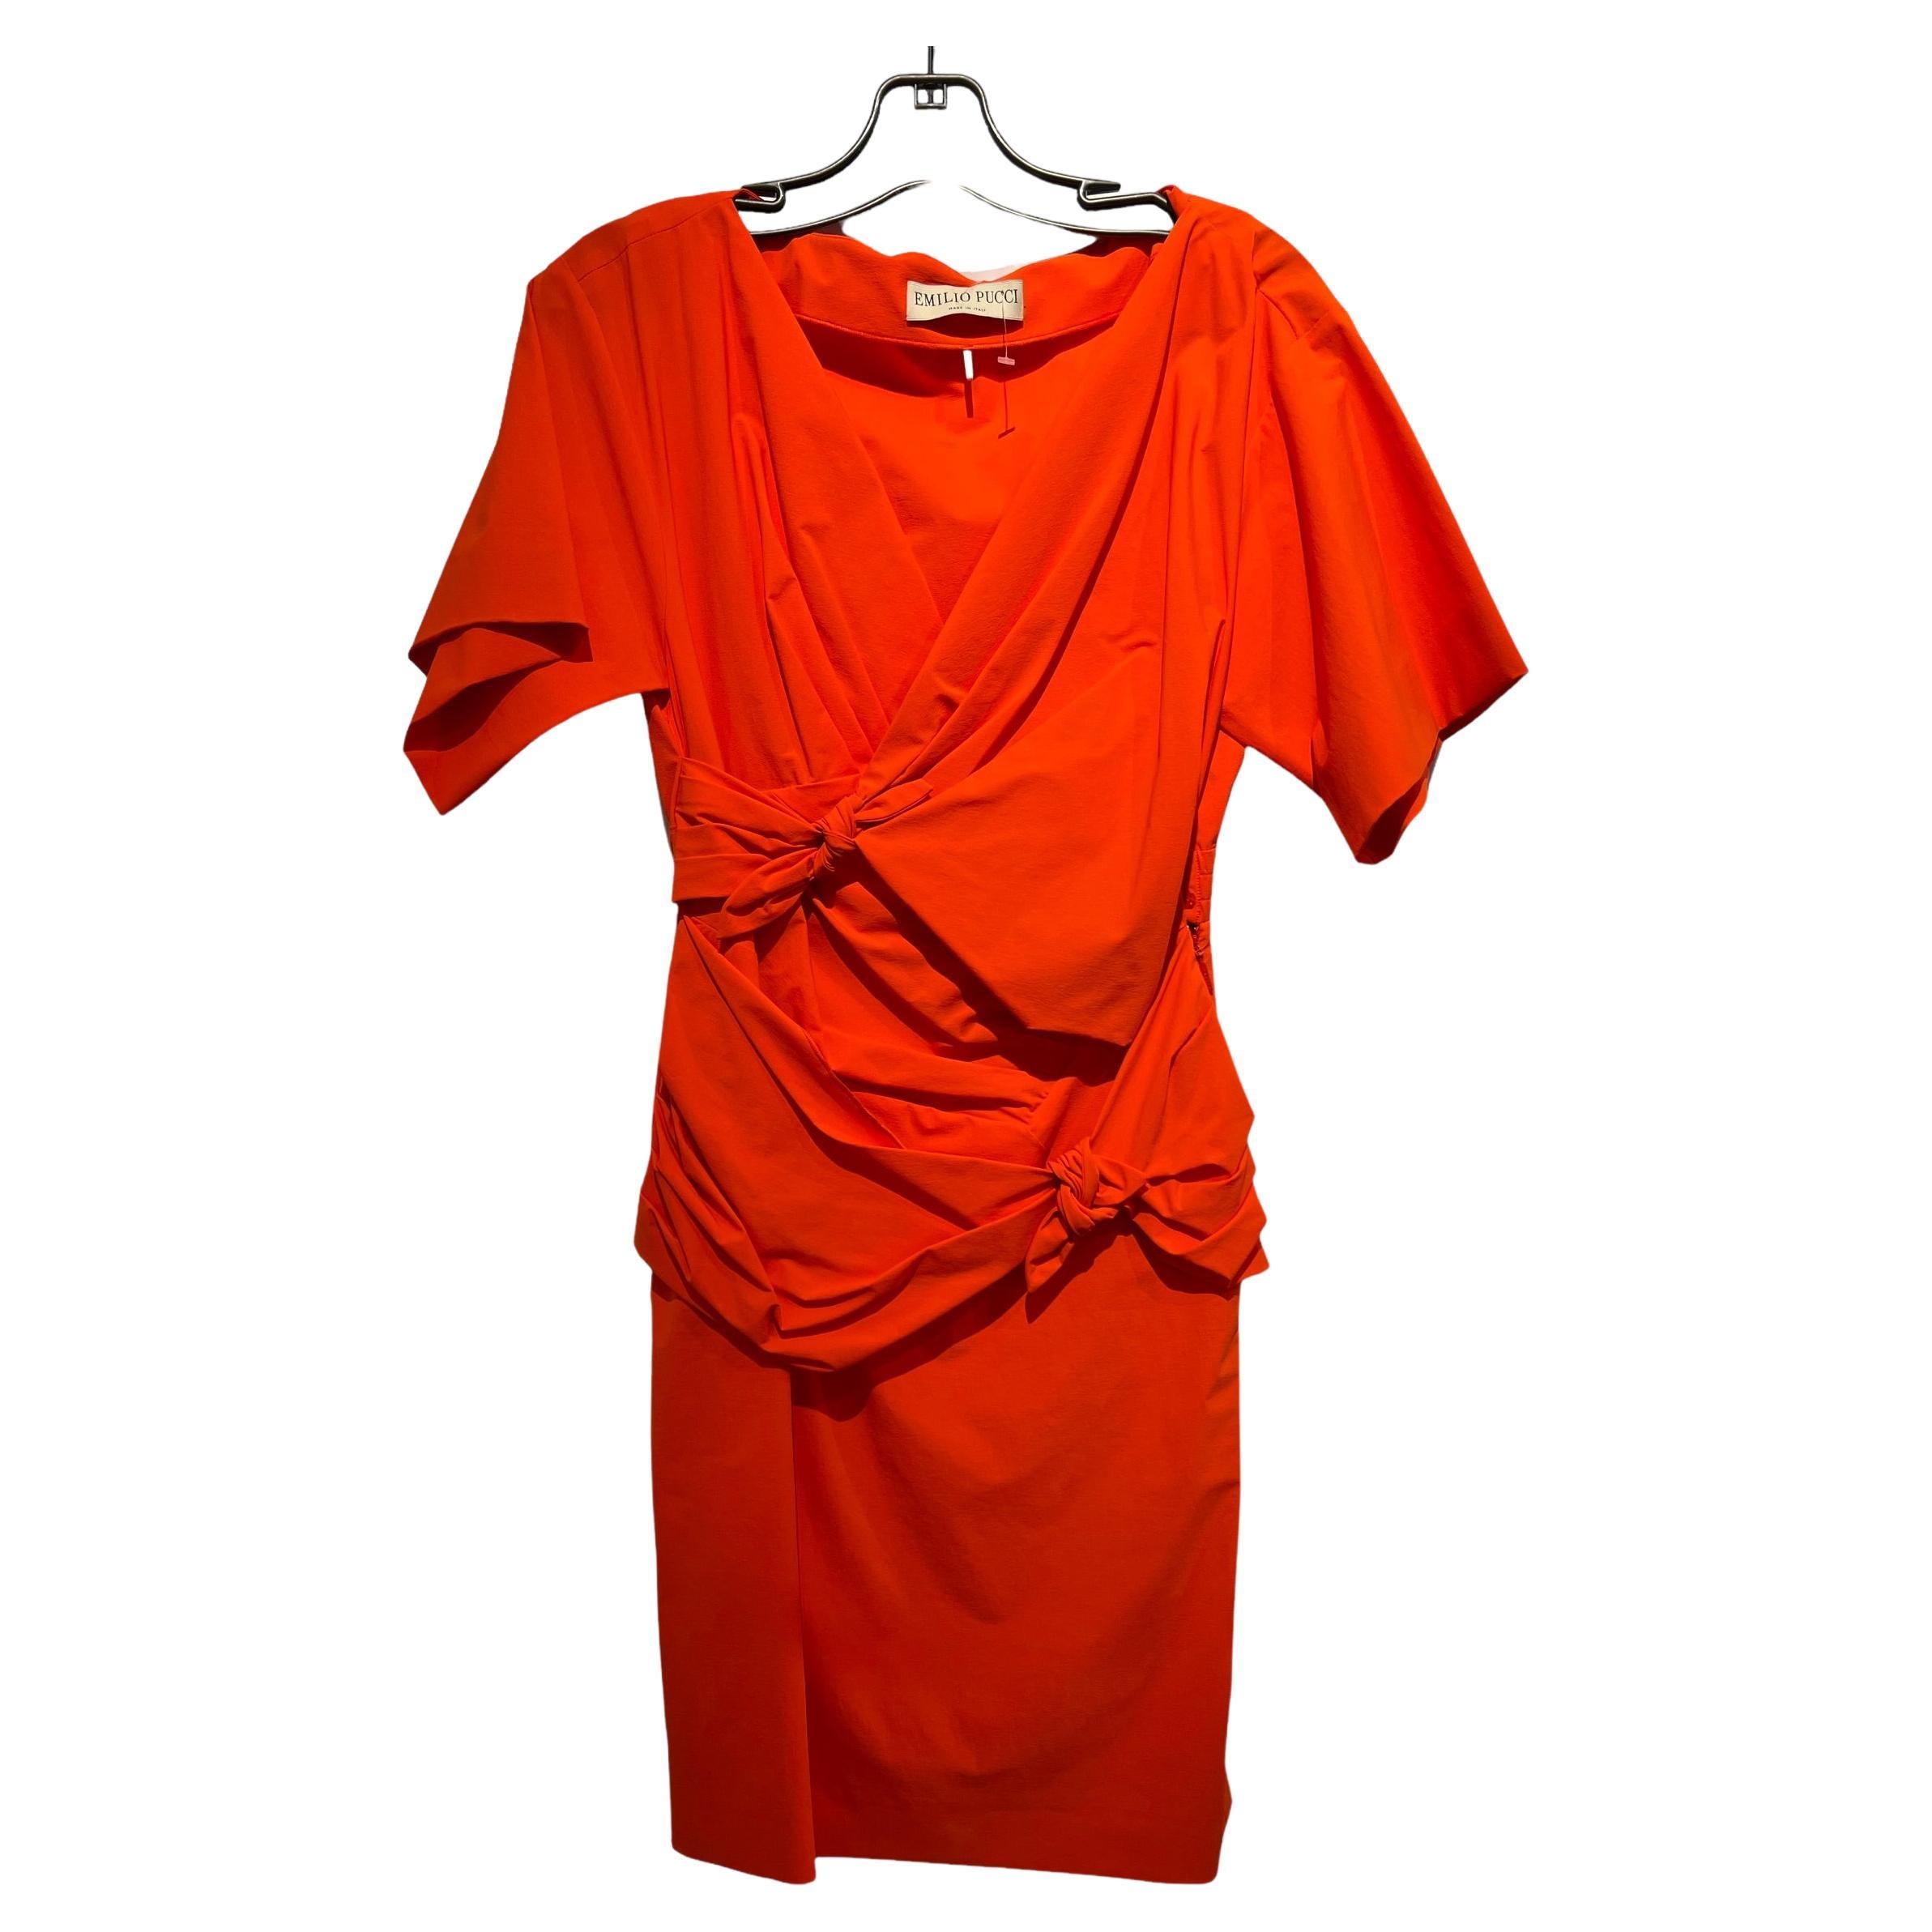 Emilio Pucci Orange Short Sleeve Structured Dress Size 42